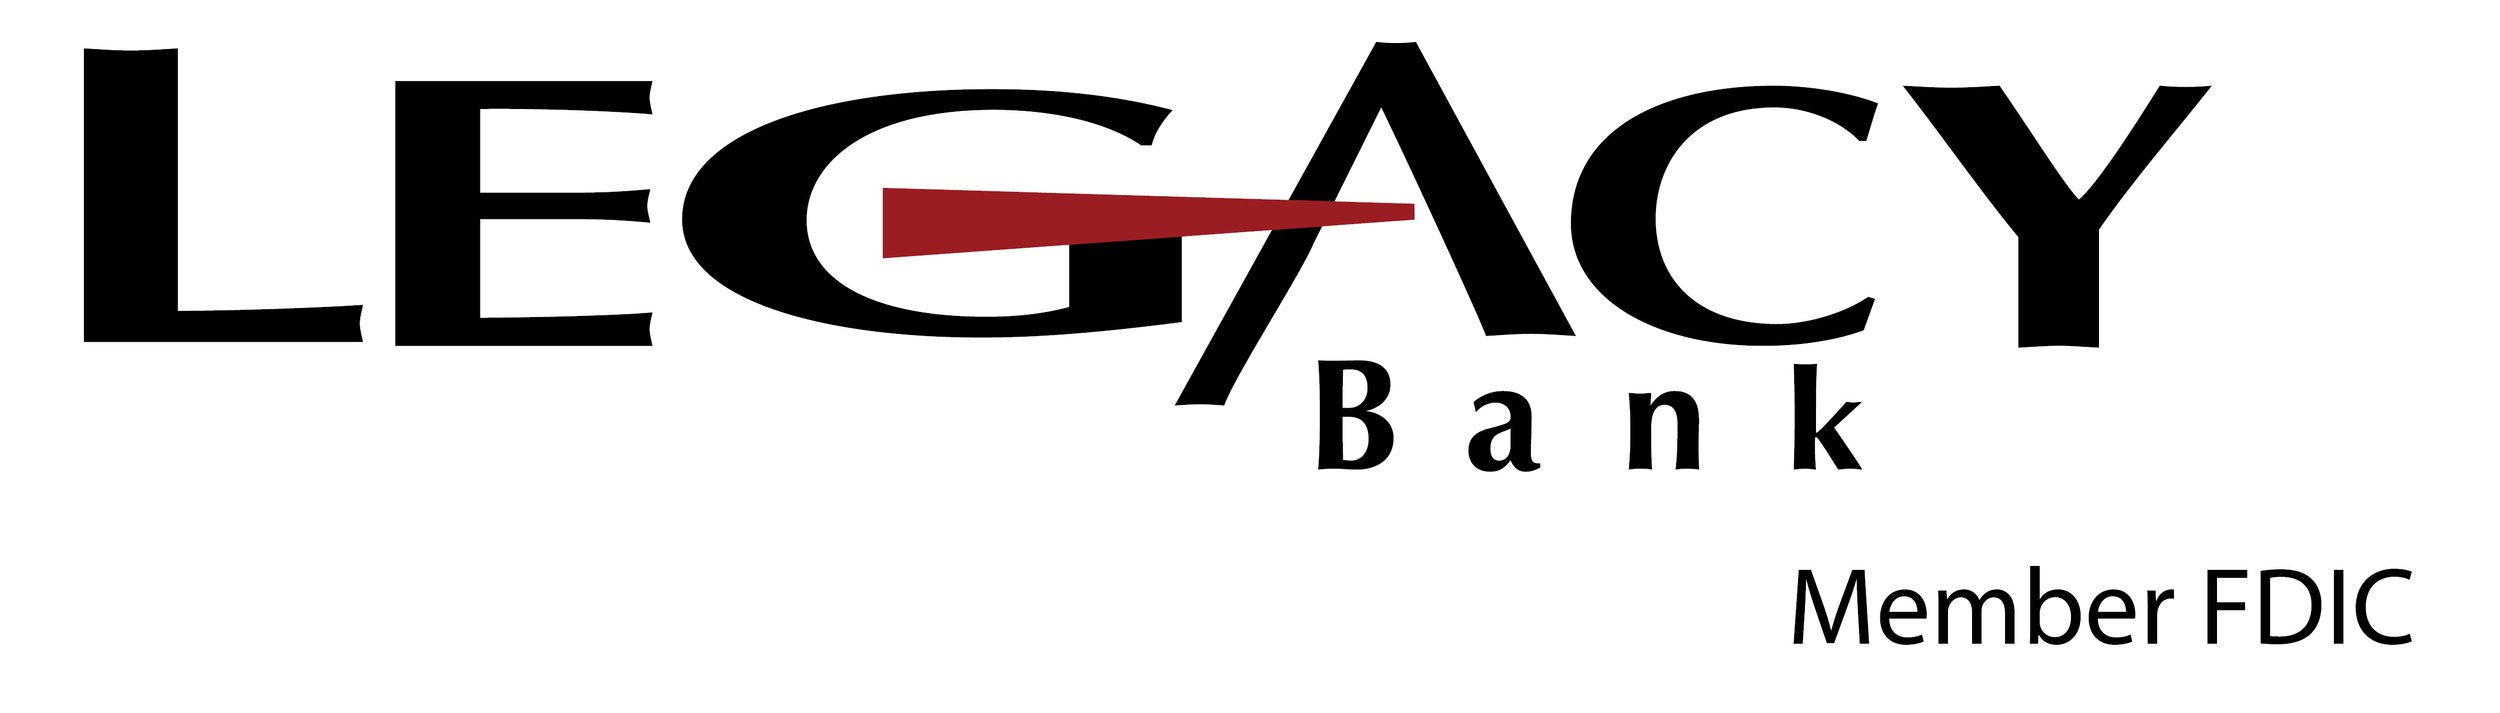 Legacy Bank Logo - Web.jpg